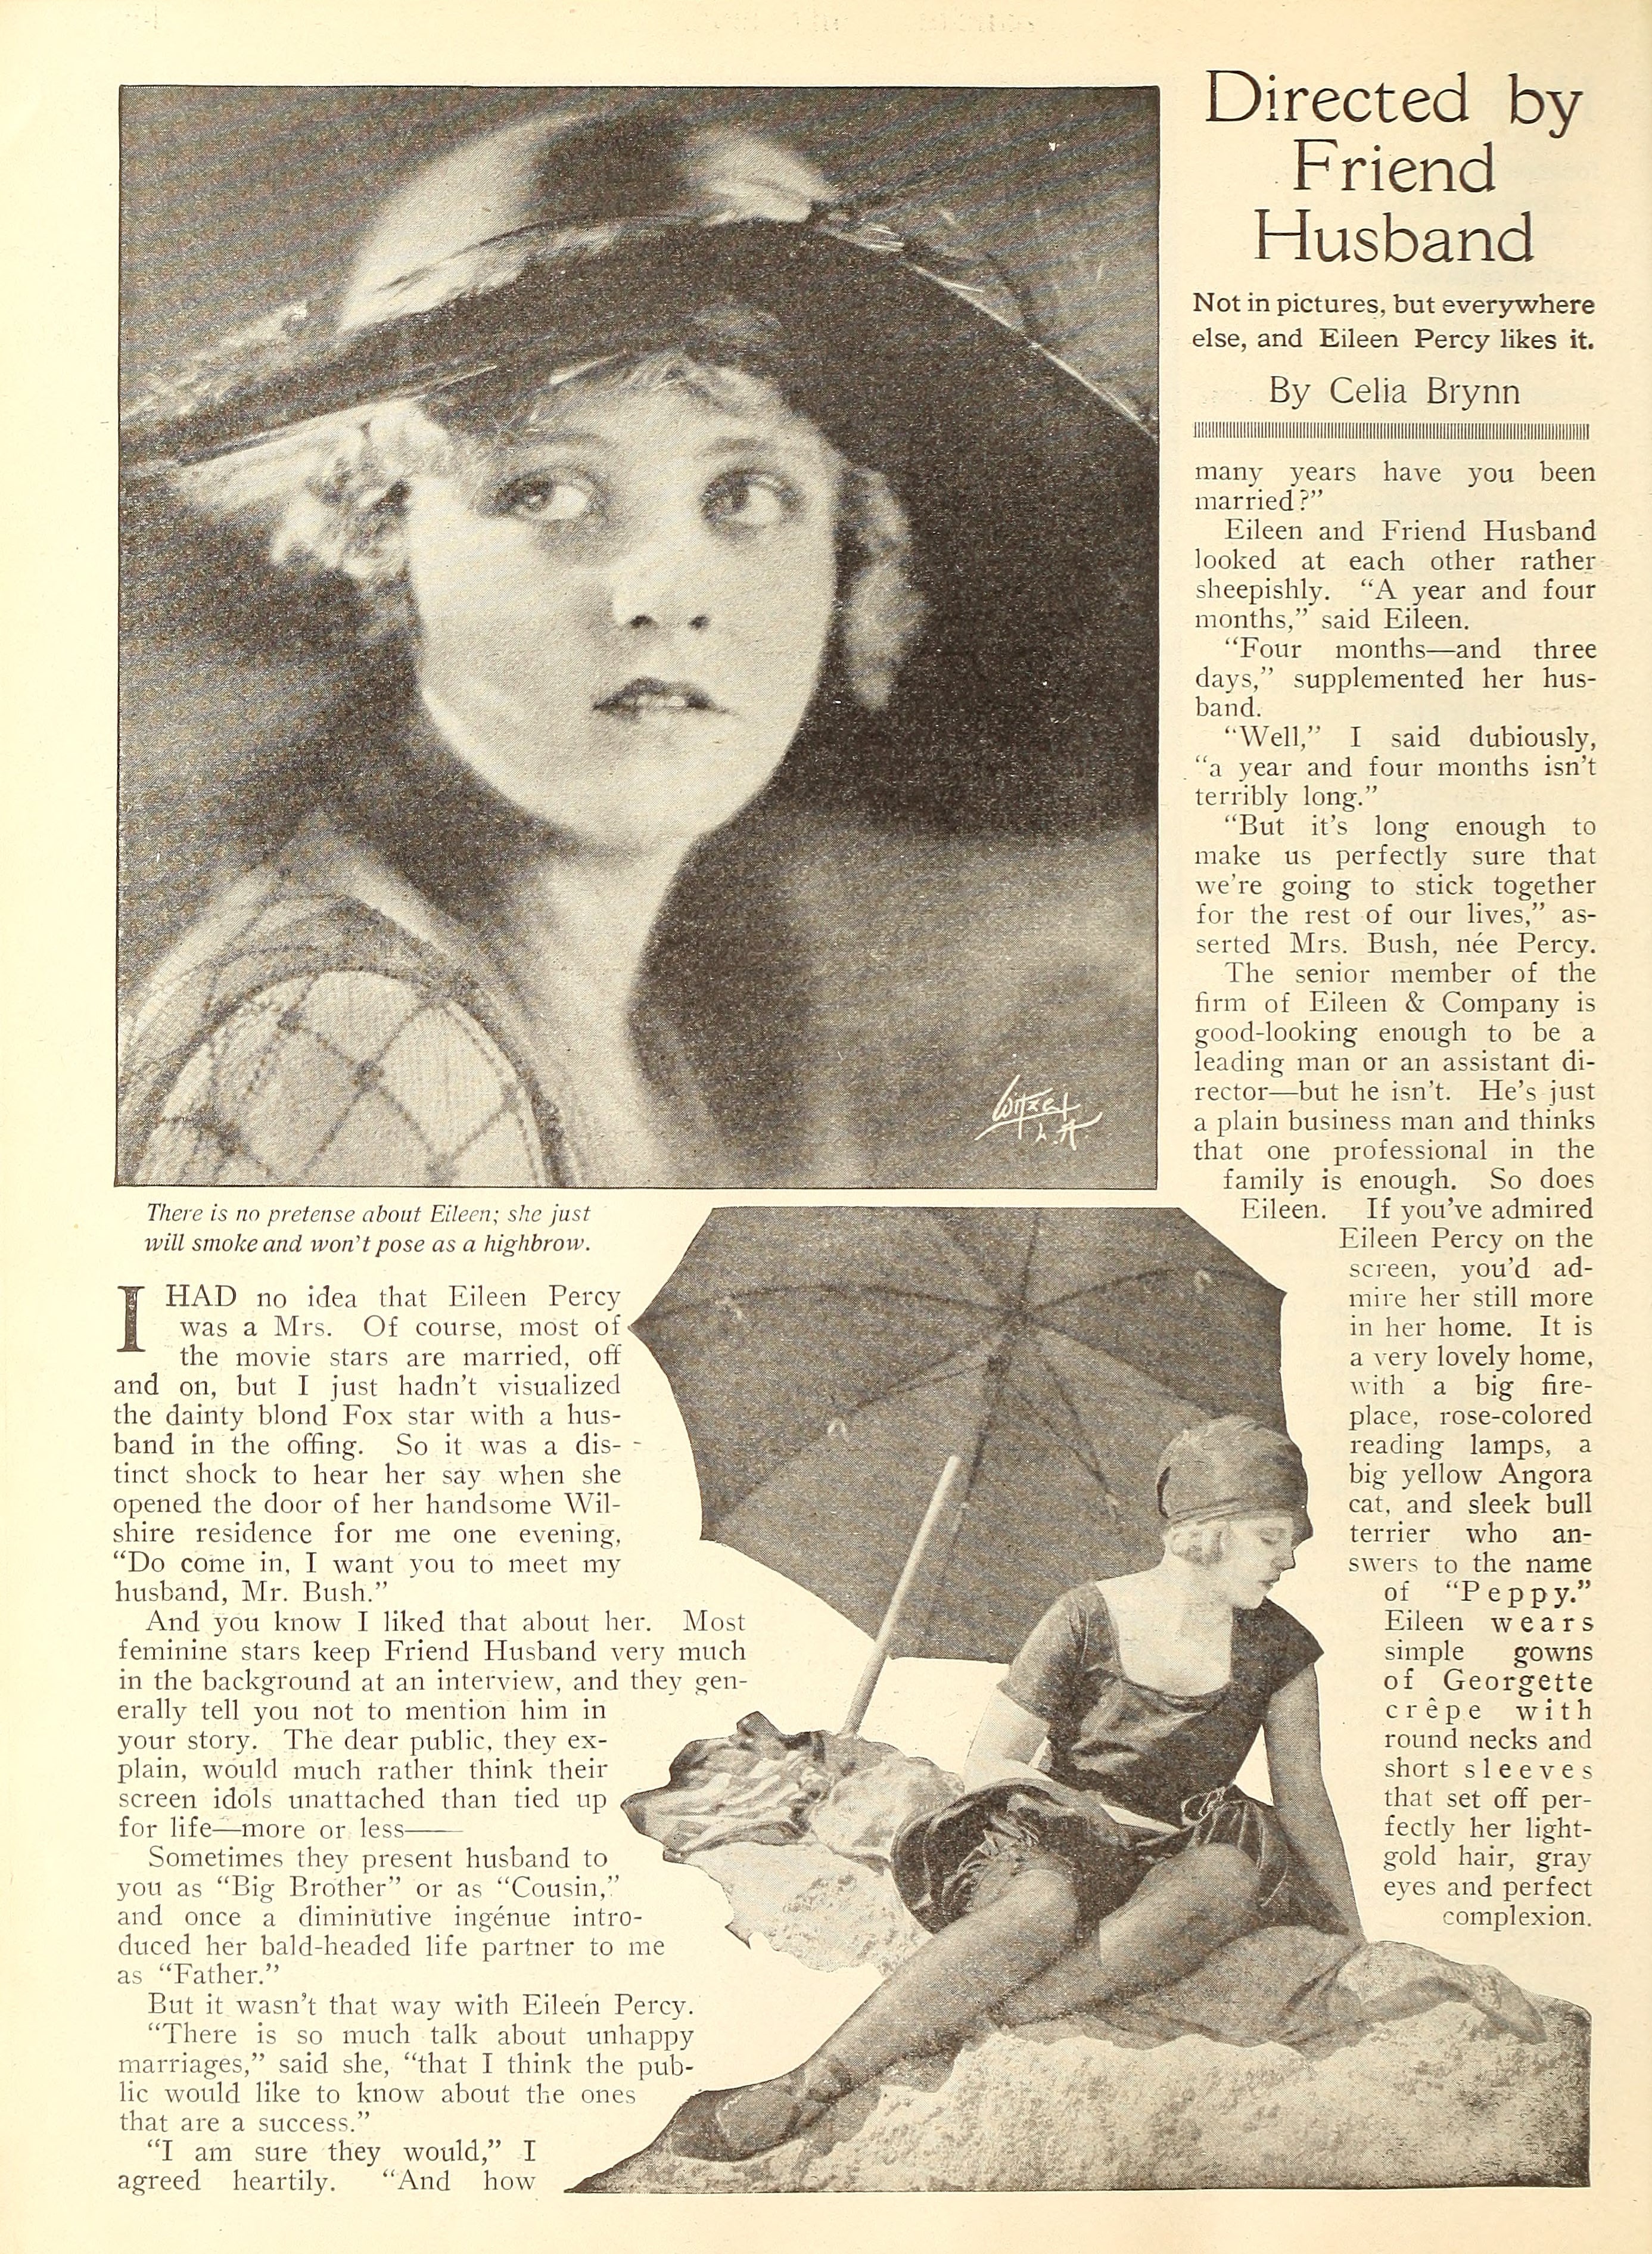 Eileen Percy — Directed by Friend Husband (1921) | www.vintoz.com